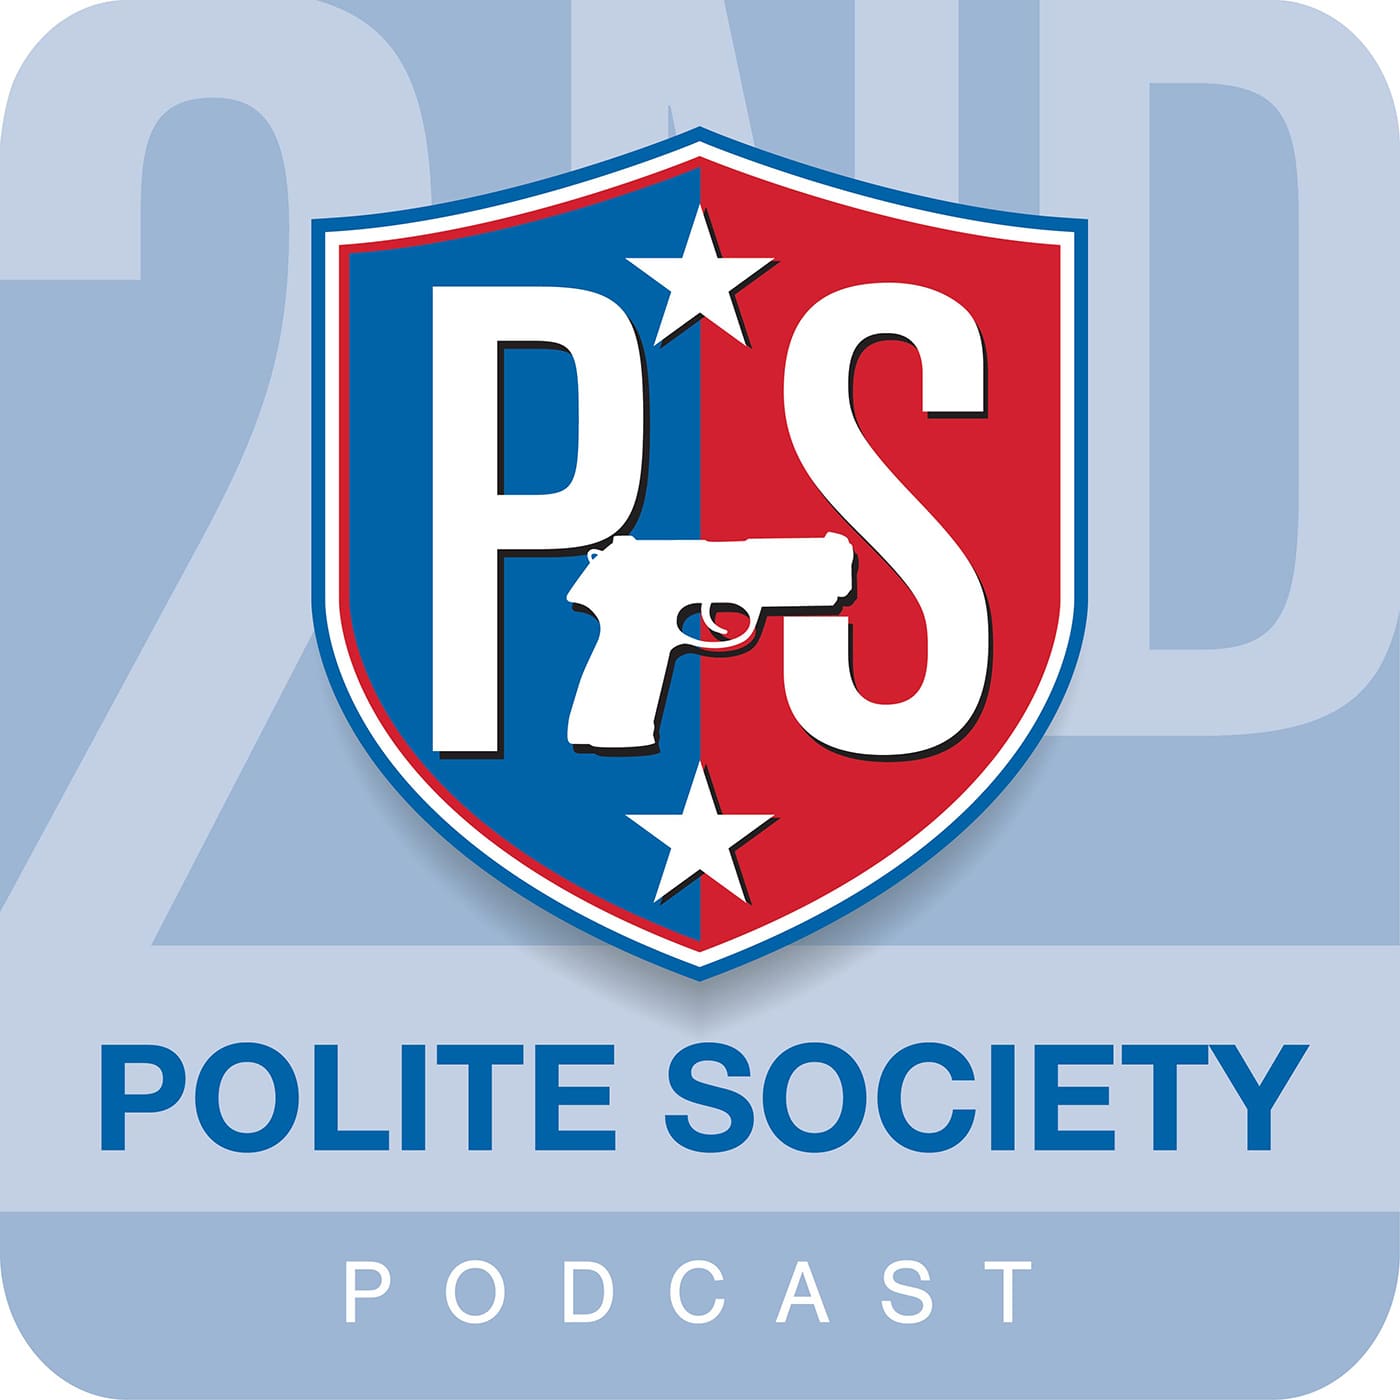 Polite Society Podcast